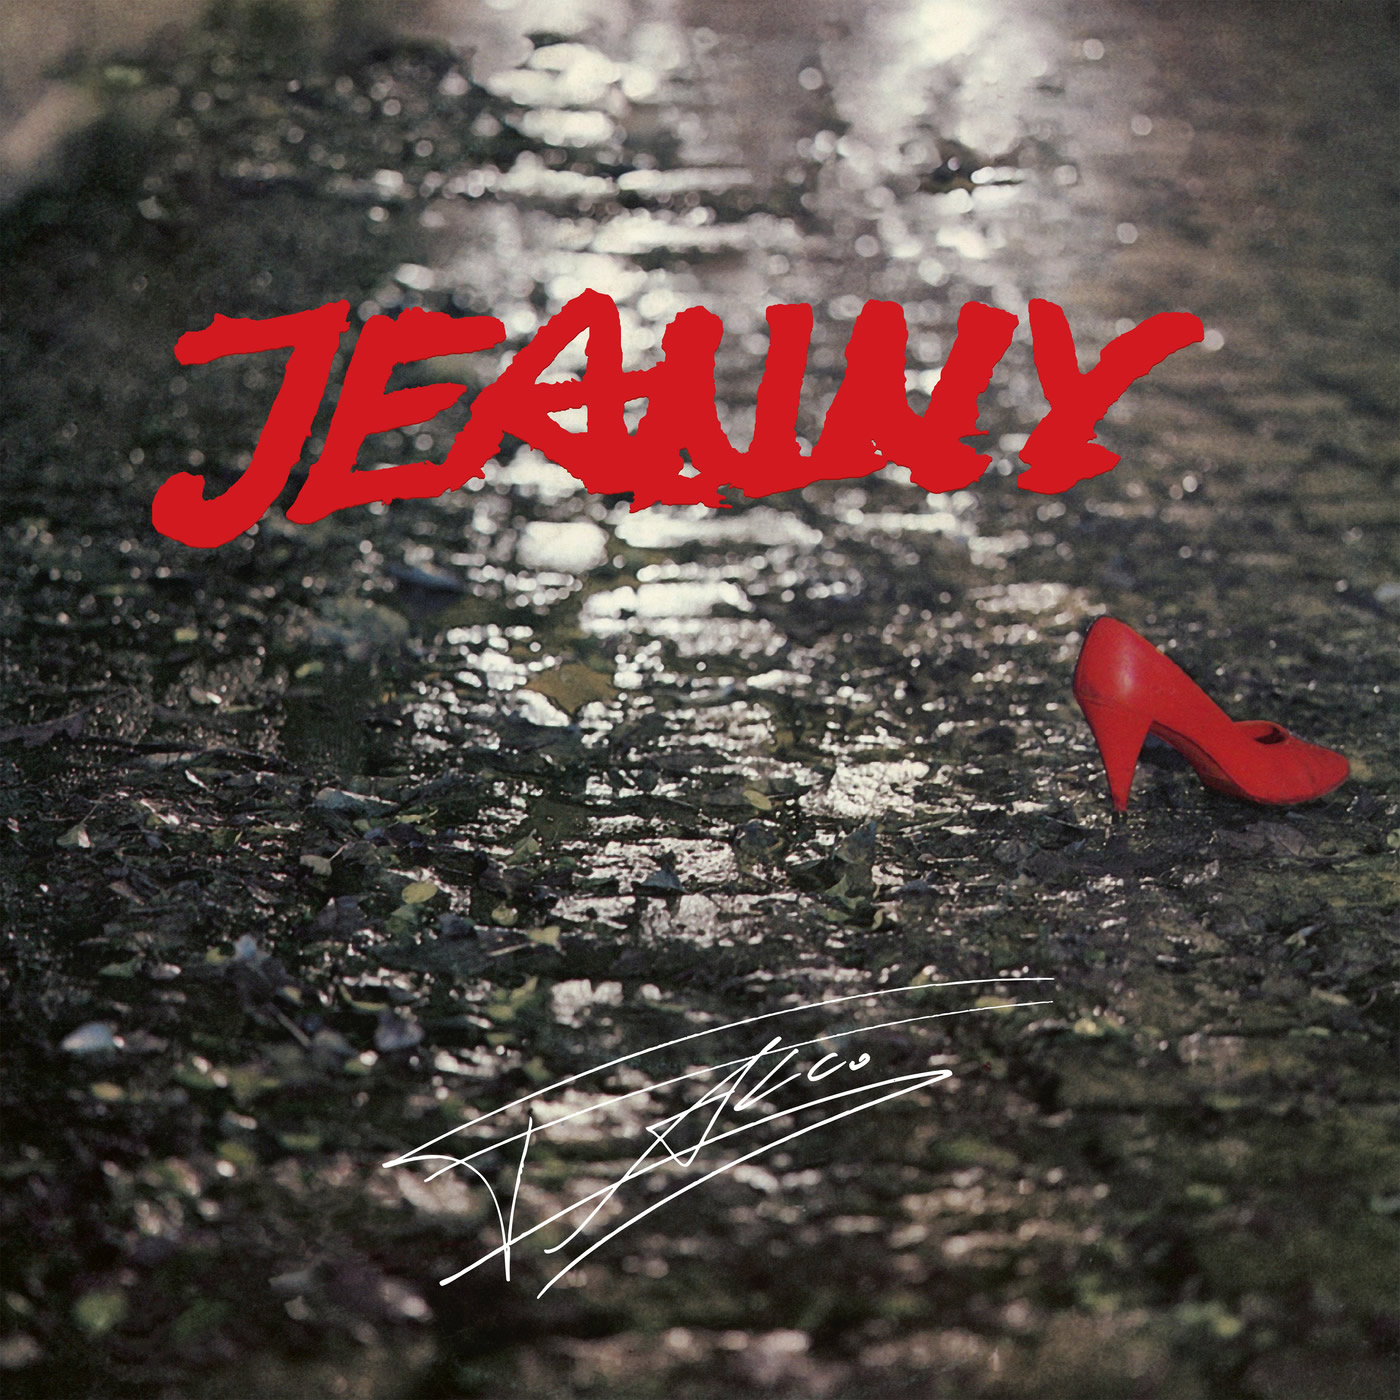 Jeanny Part 3